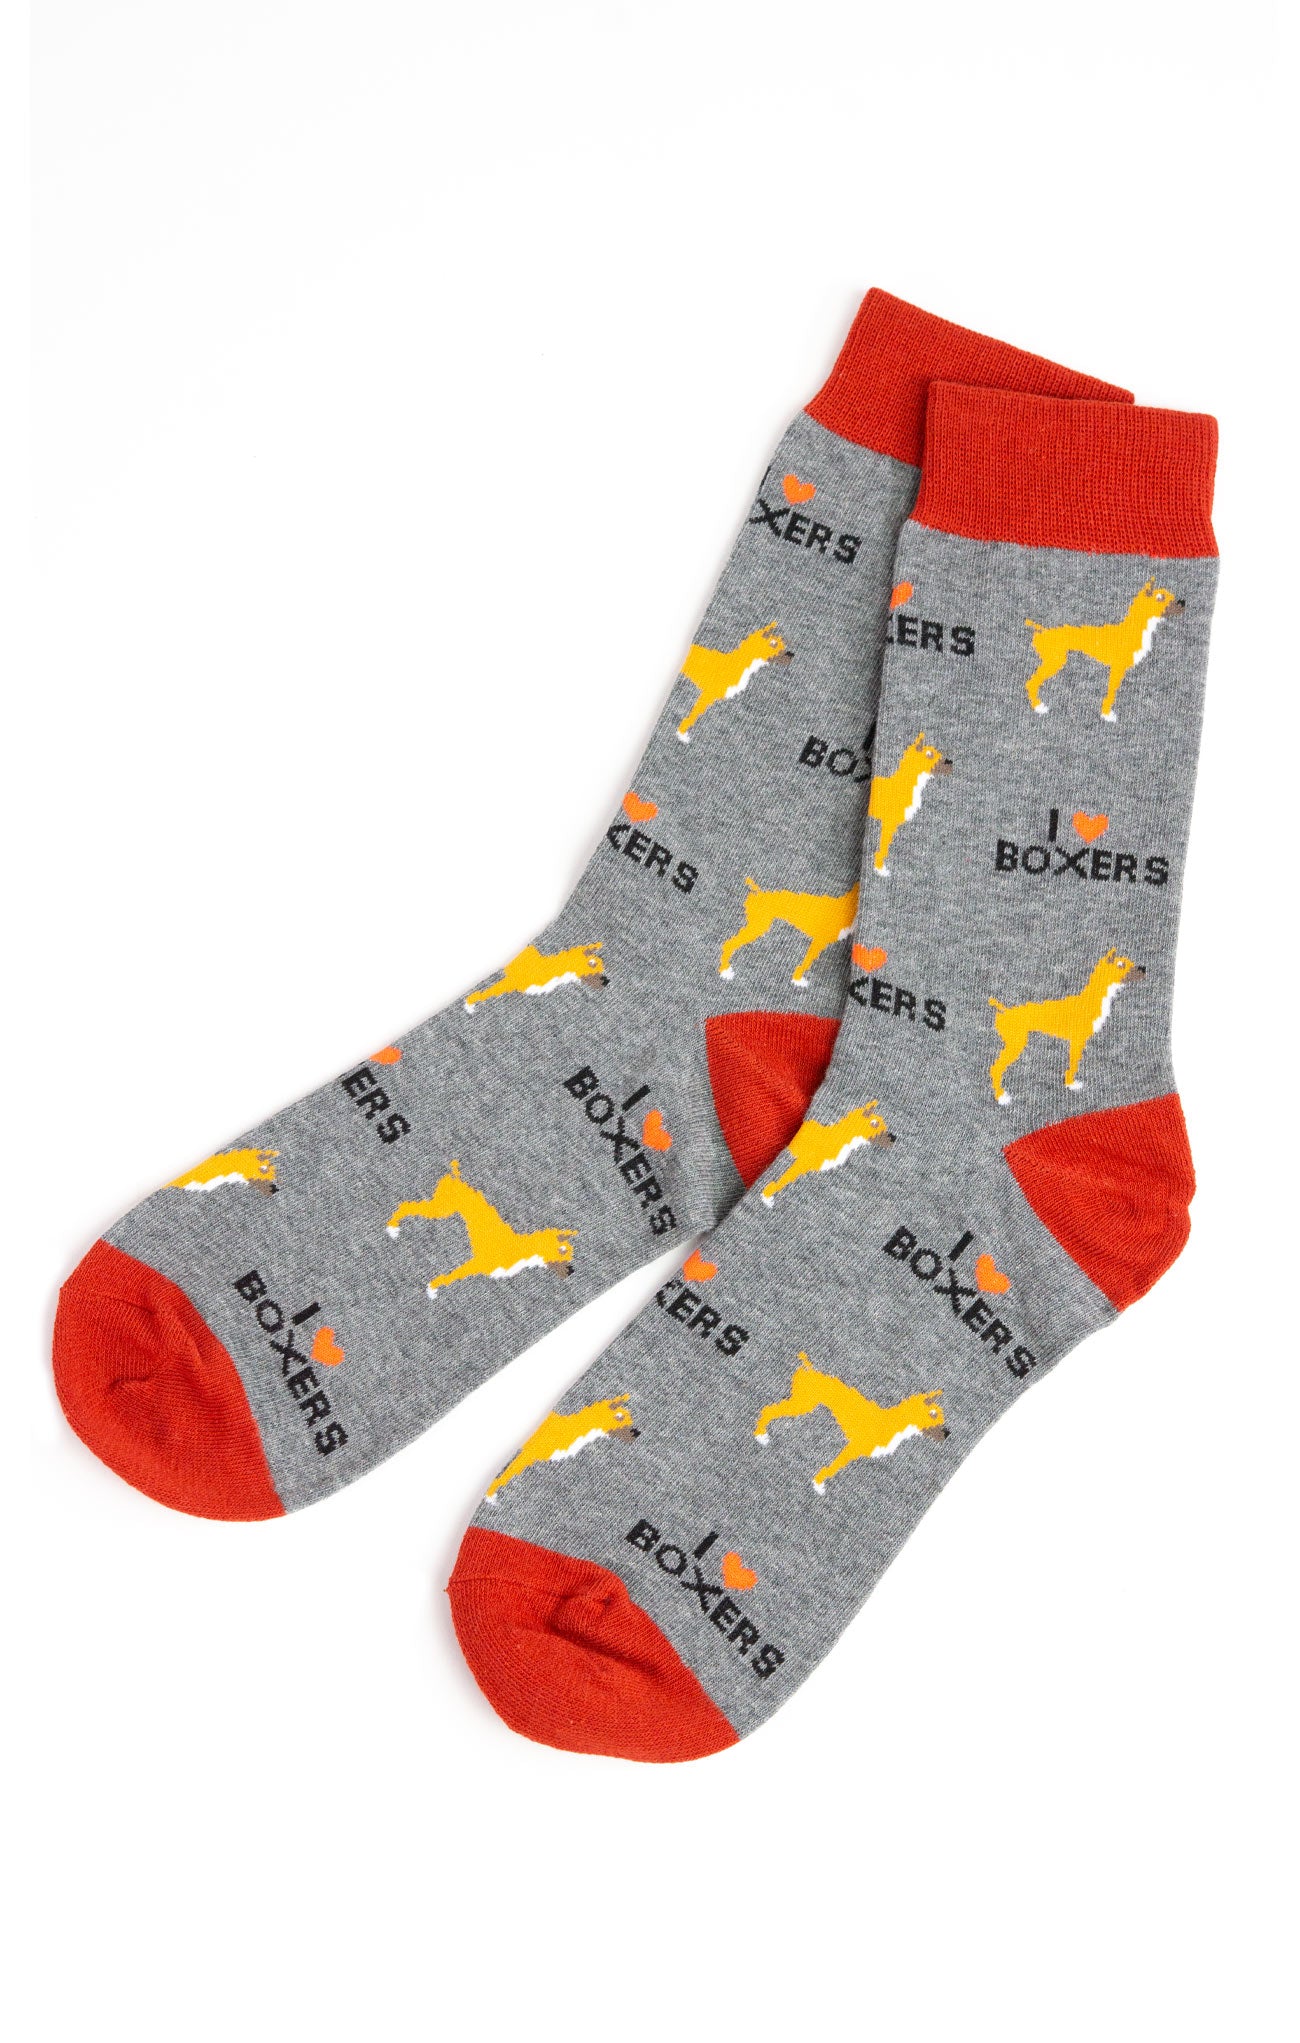 Boxer Dog Socks